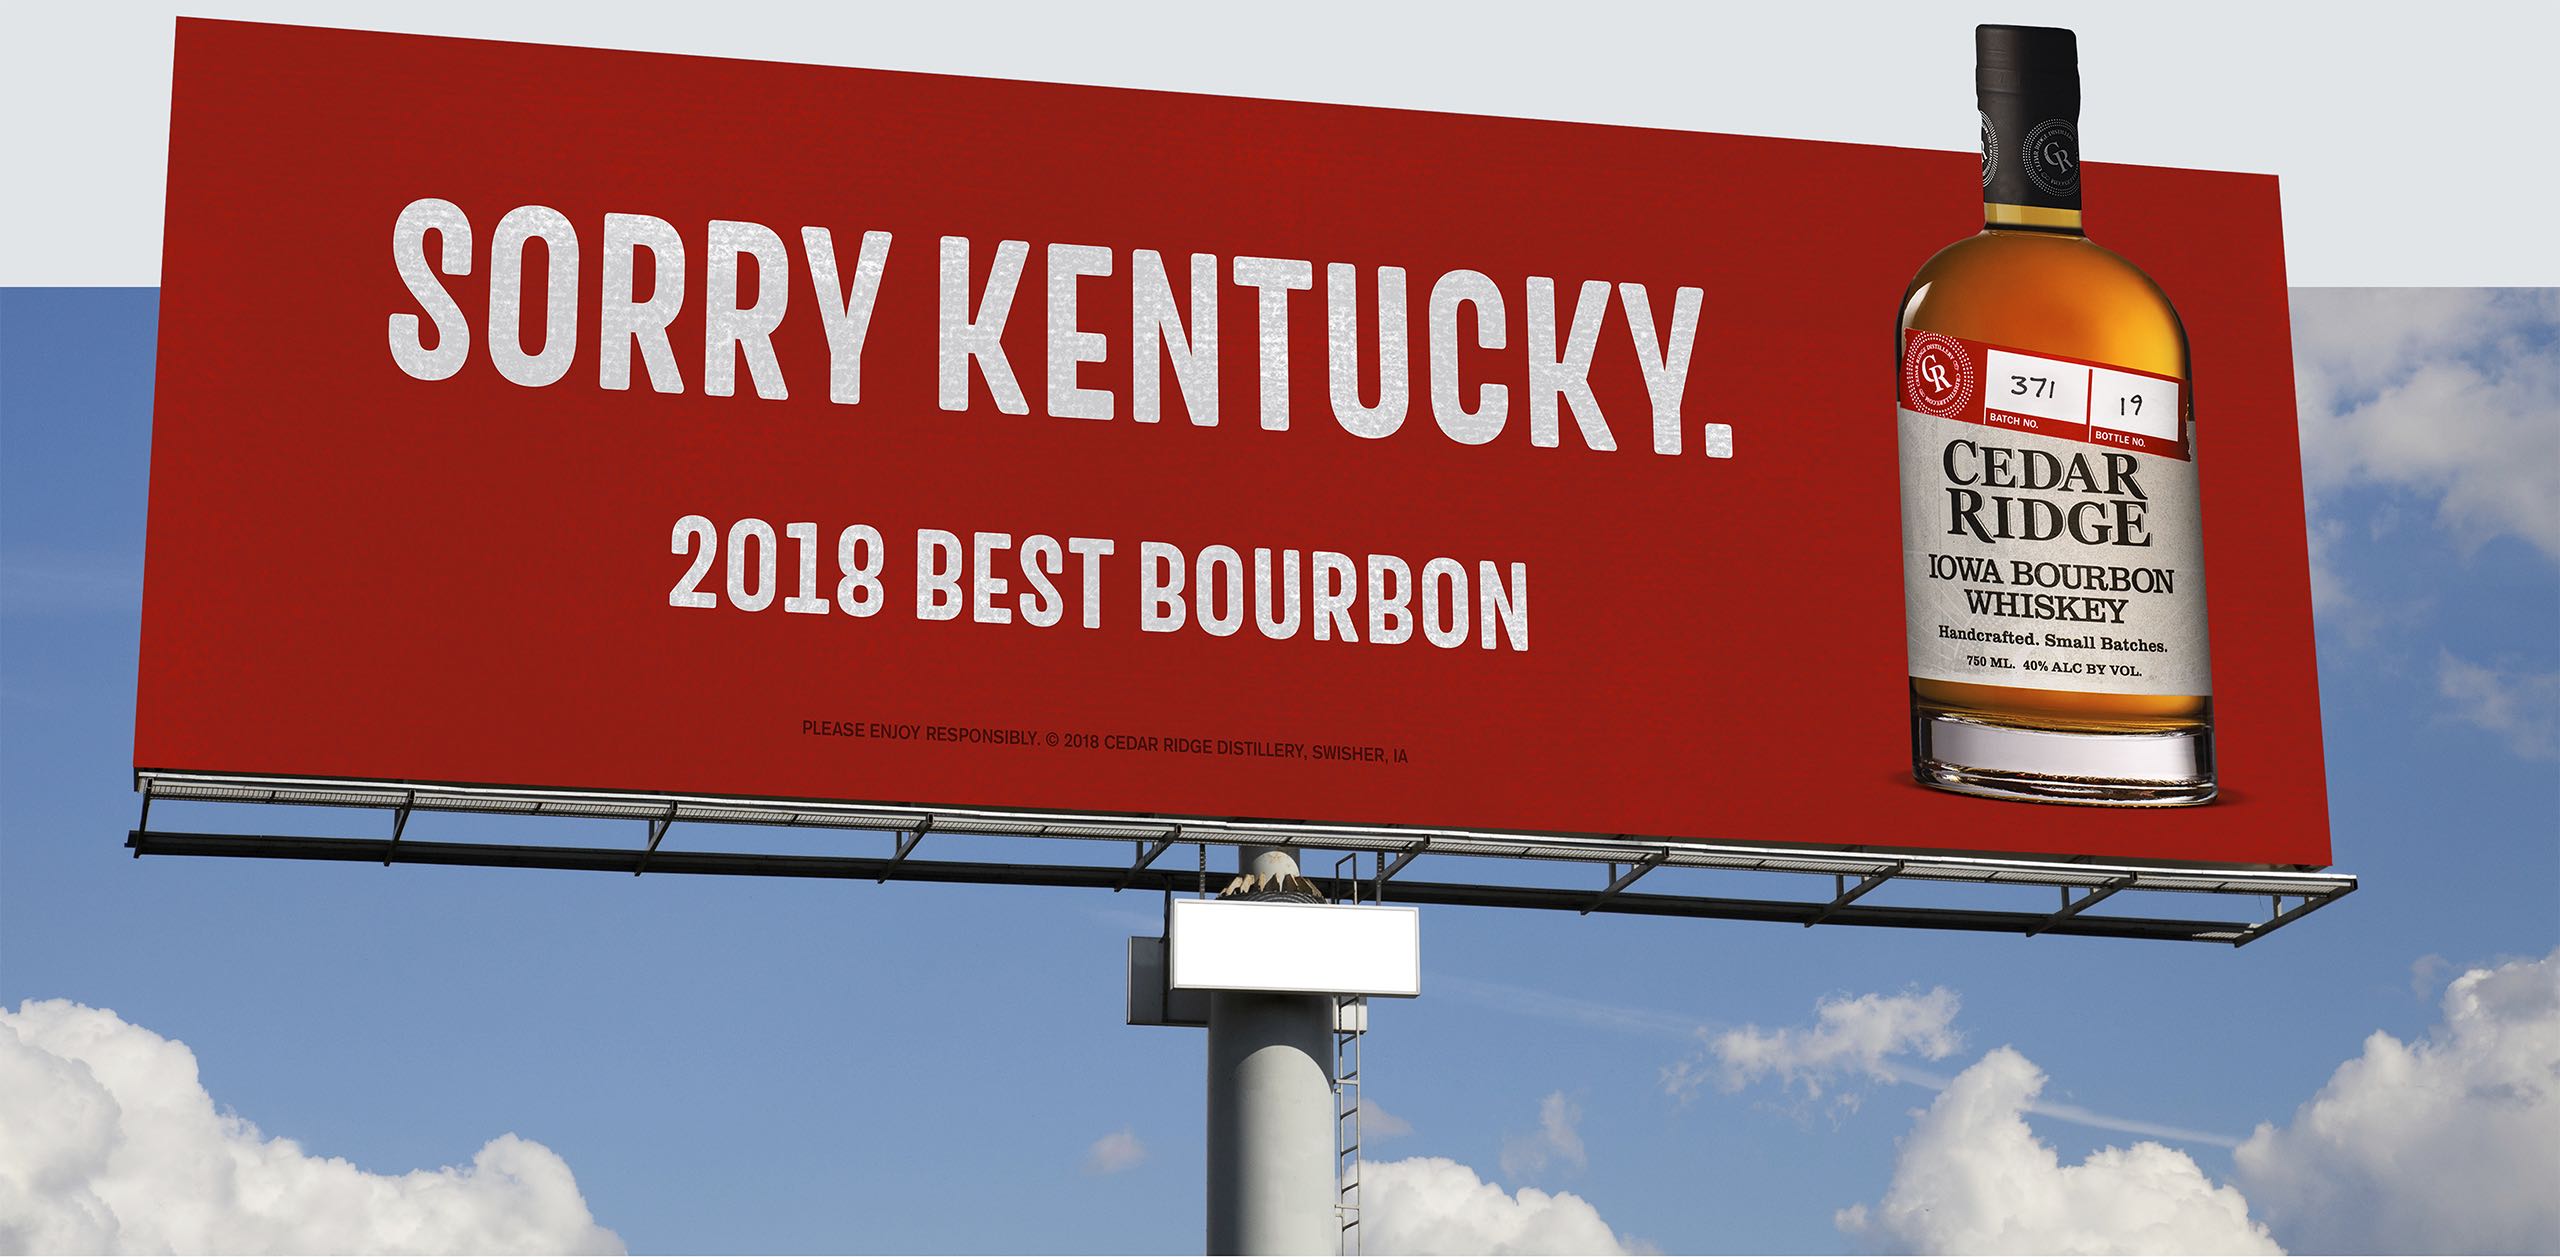 Cedar Ridge Sorry Kentucky billboard